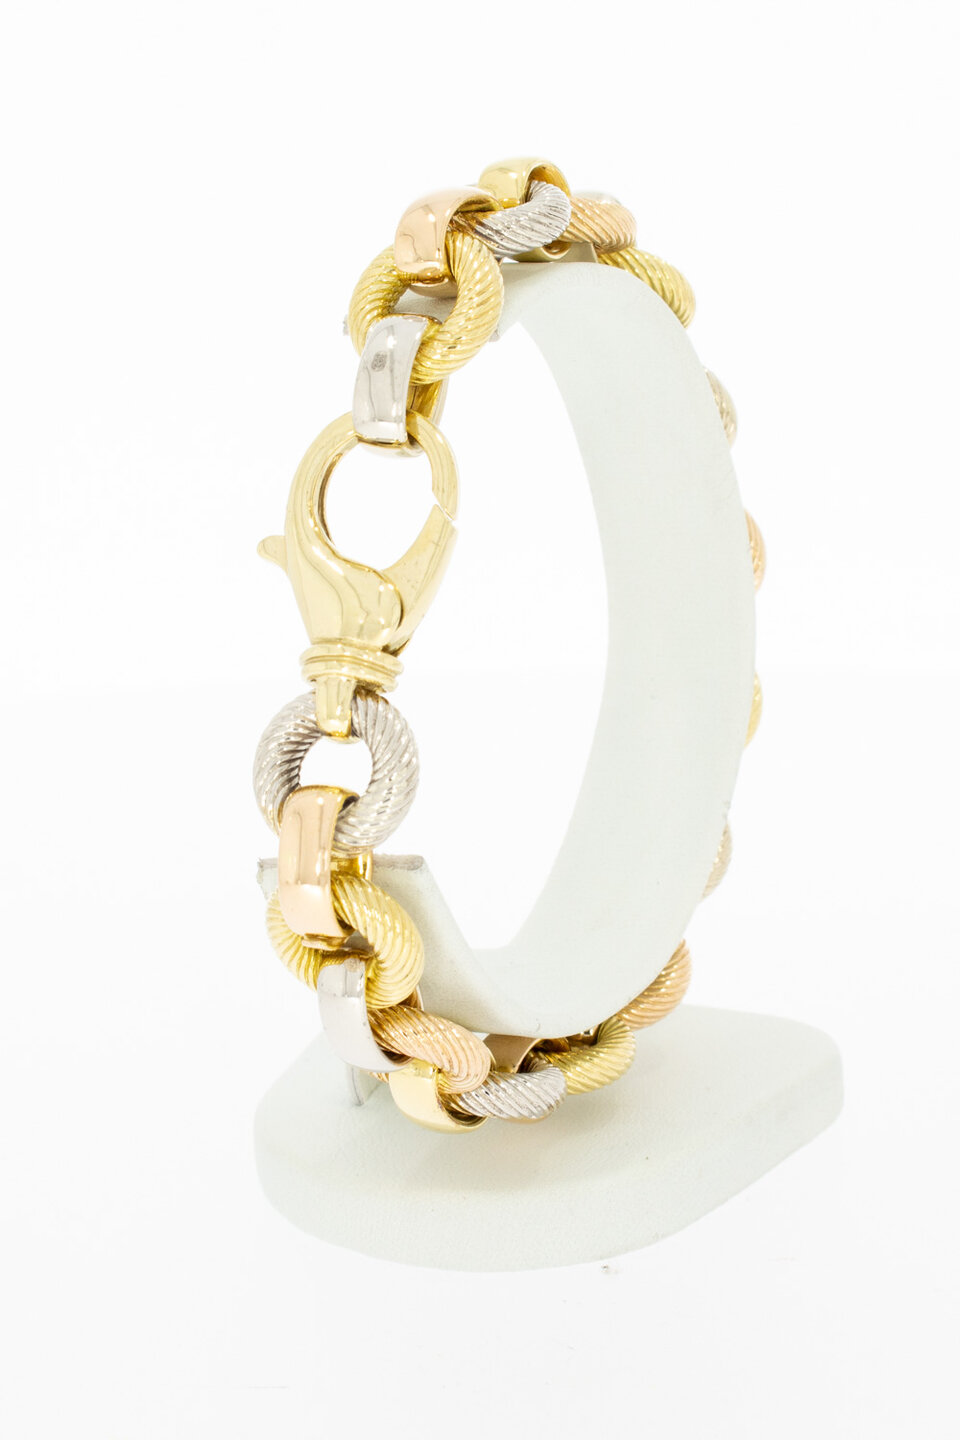 18 Karaat tricolor gouden Anker armband - 22,5 cm